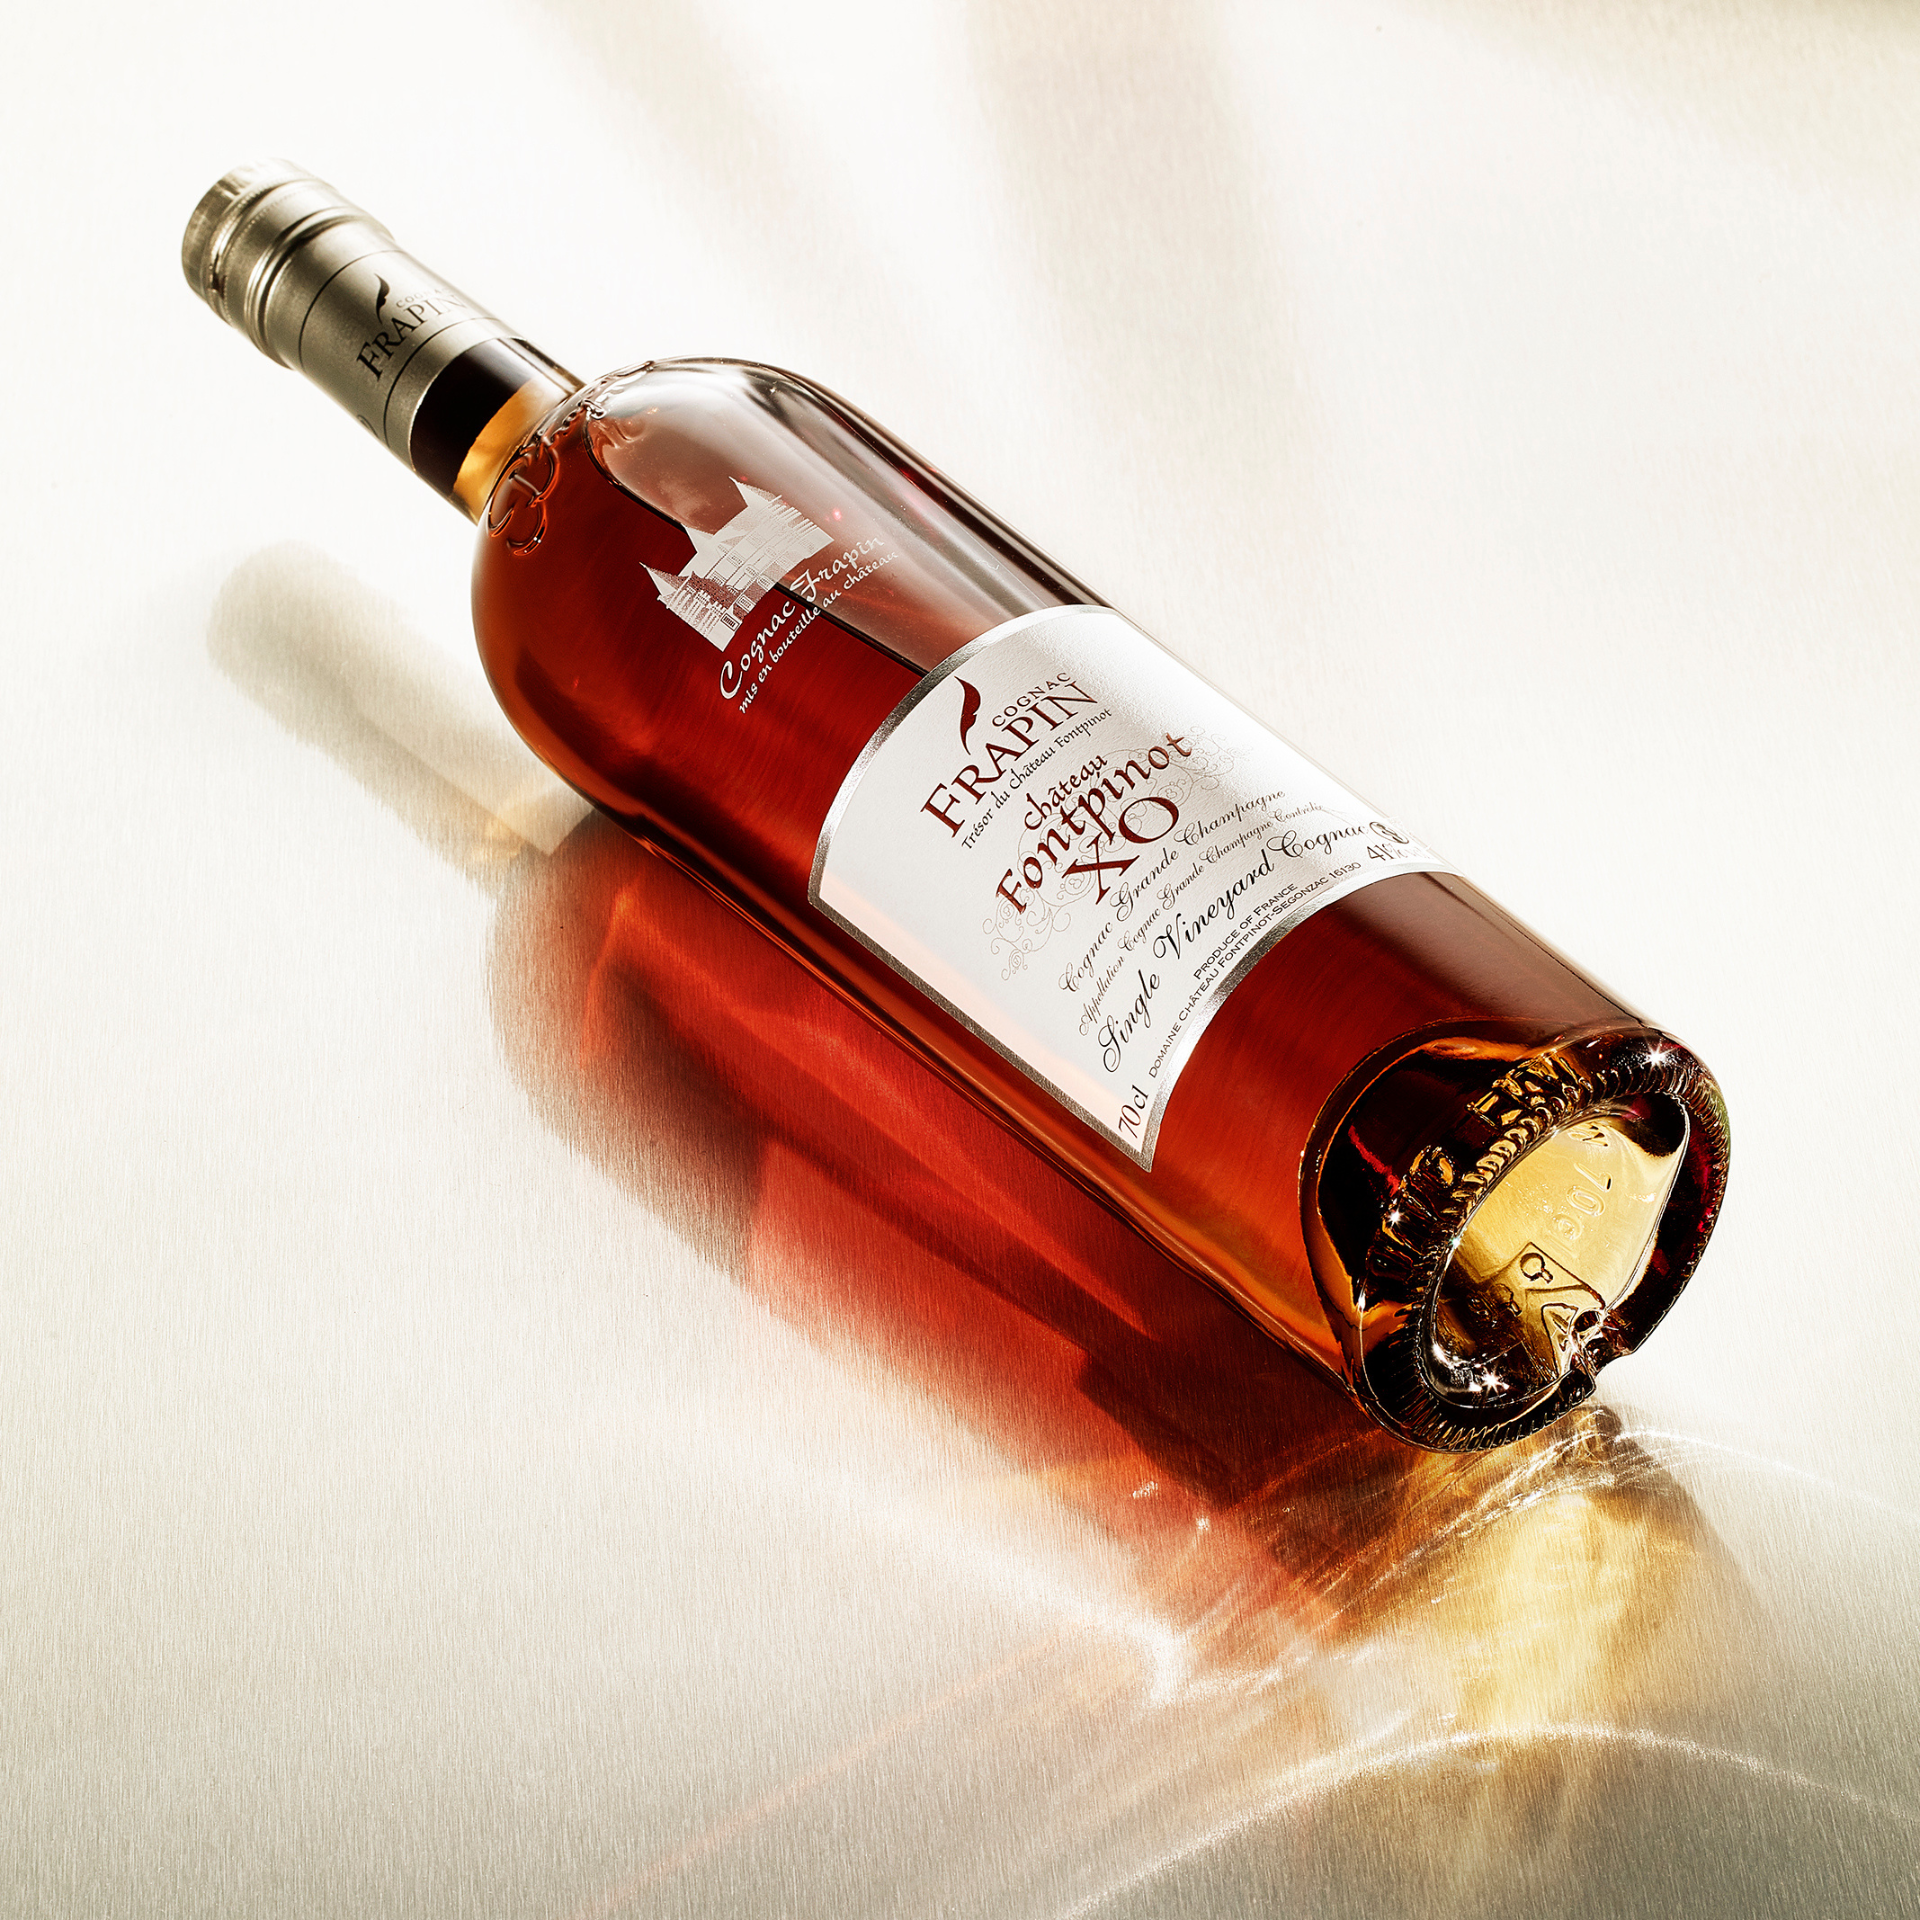 Frapin Chateau Fontpinot XO Premier Grand Cru du Cognac 41% 0,7l